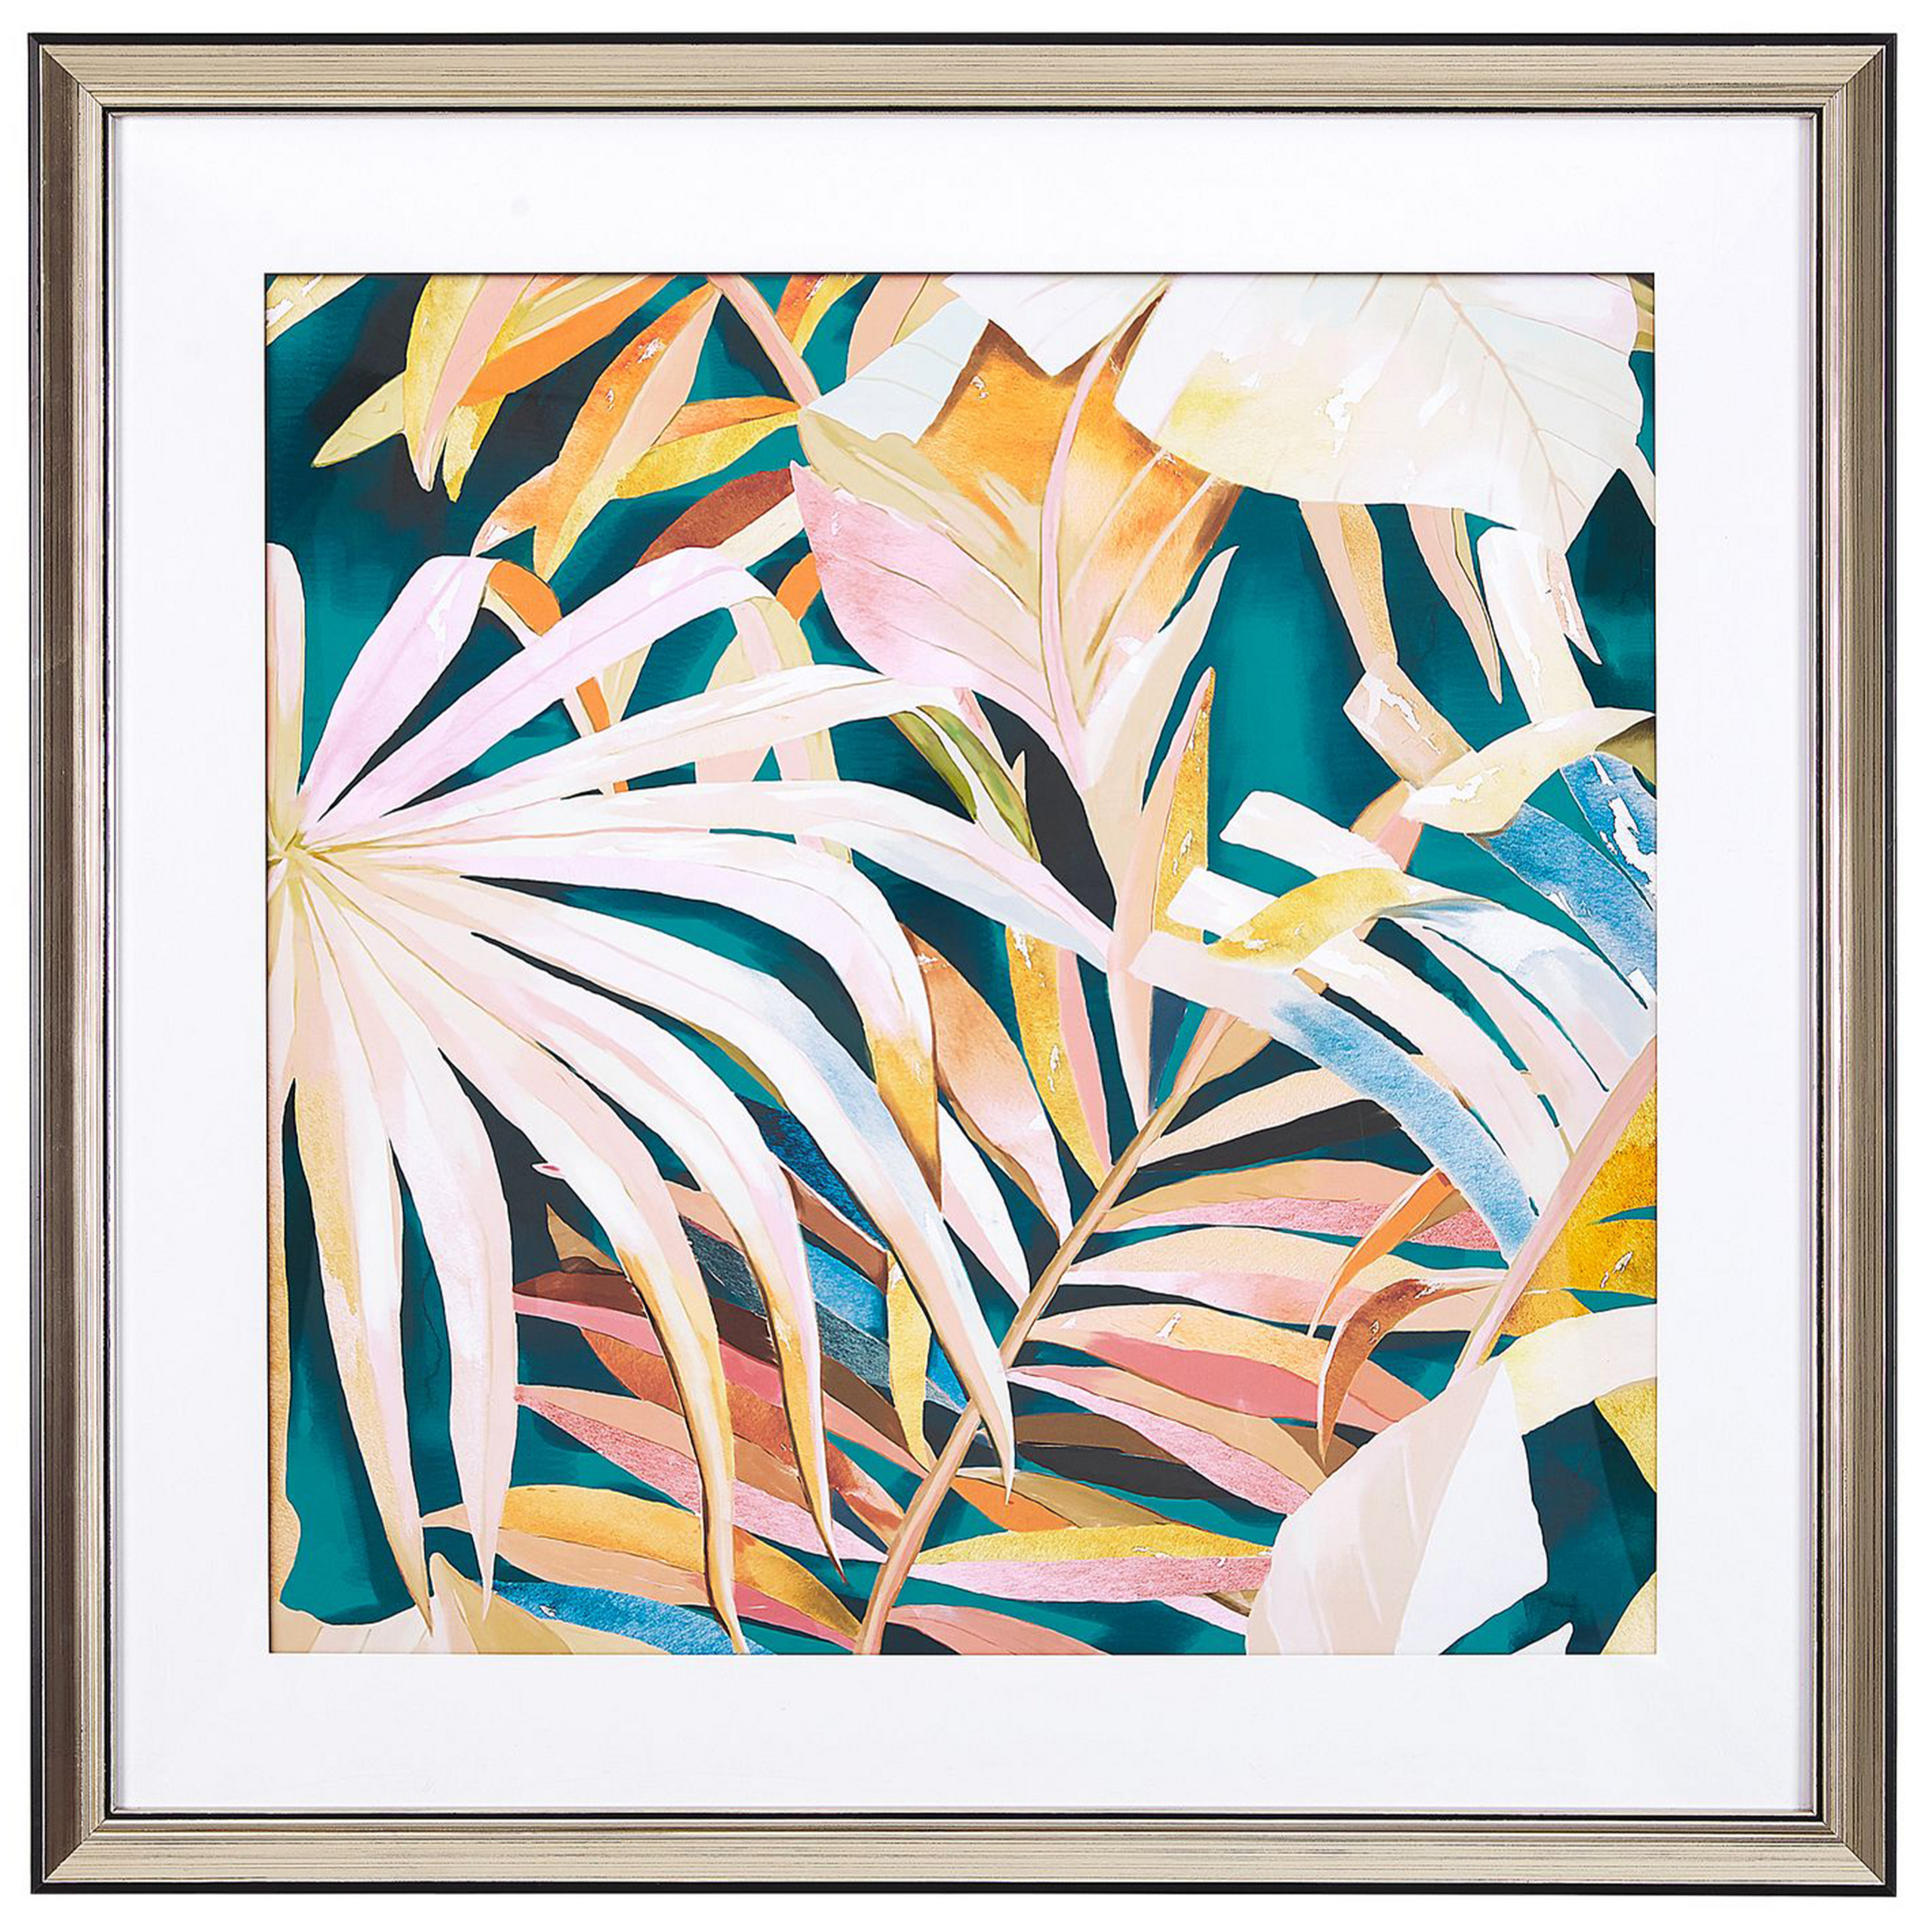 Beliani Framed Wall Art Multicolour Print on Paper 60 x 60 cm Passe-partout Frame Palm Leaf Theme